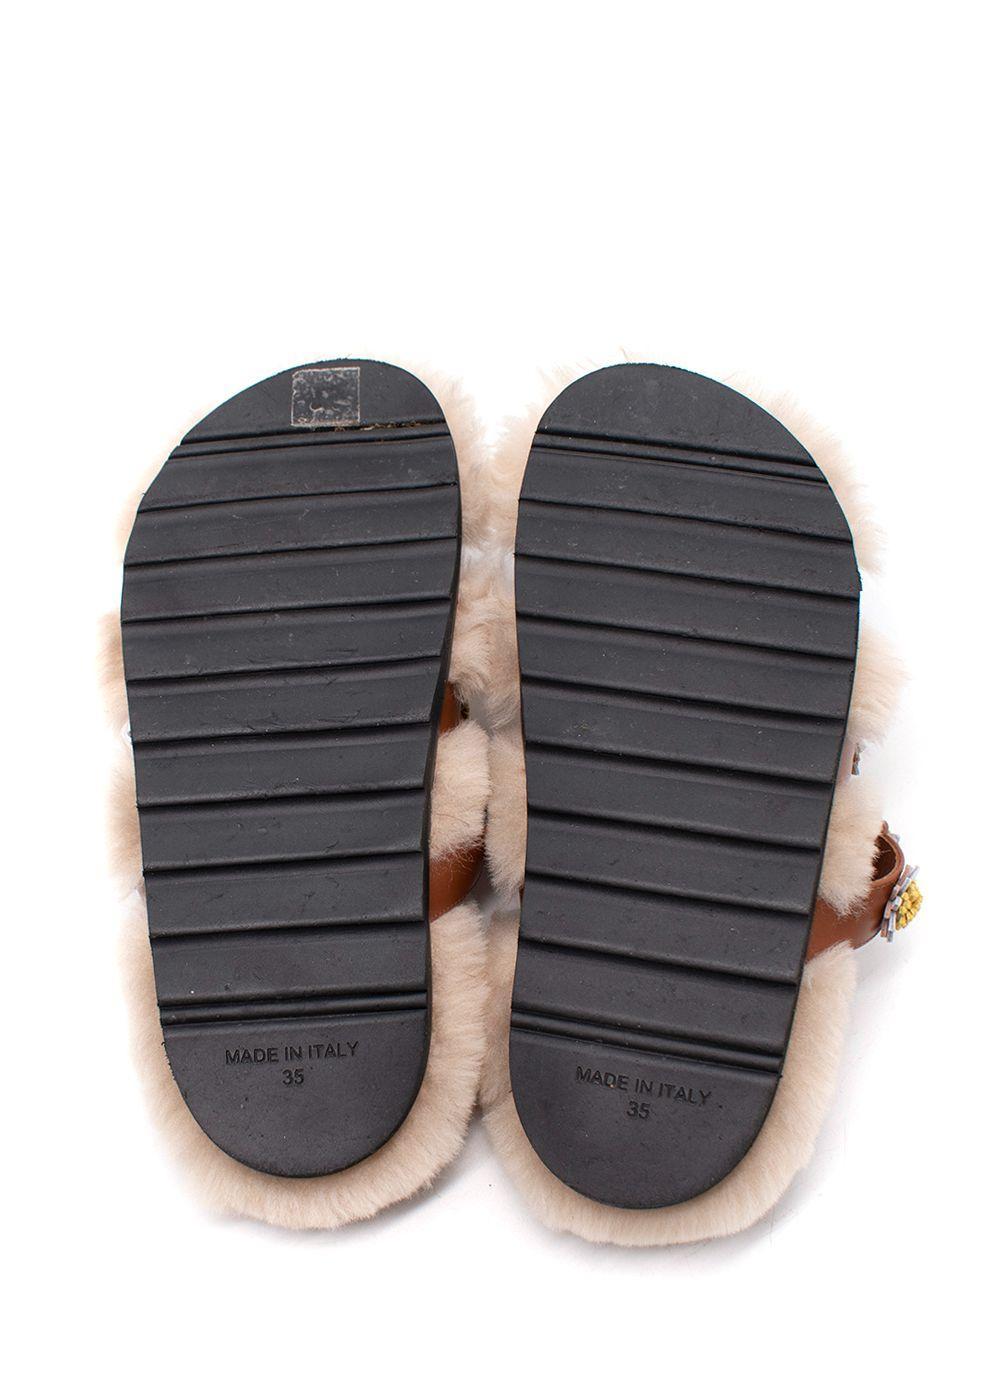 Women's Fabrizio Viti Brown Leather Daisy Applique Shearling Lined Sandals